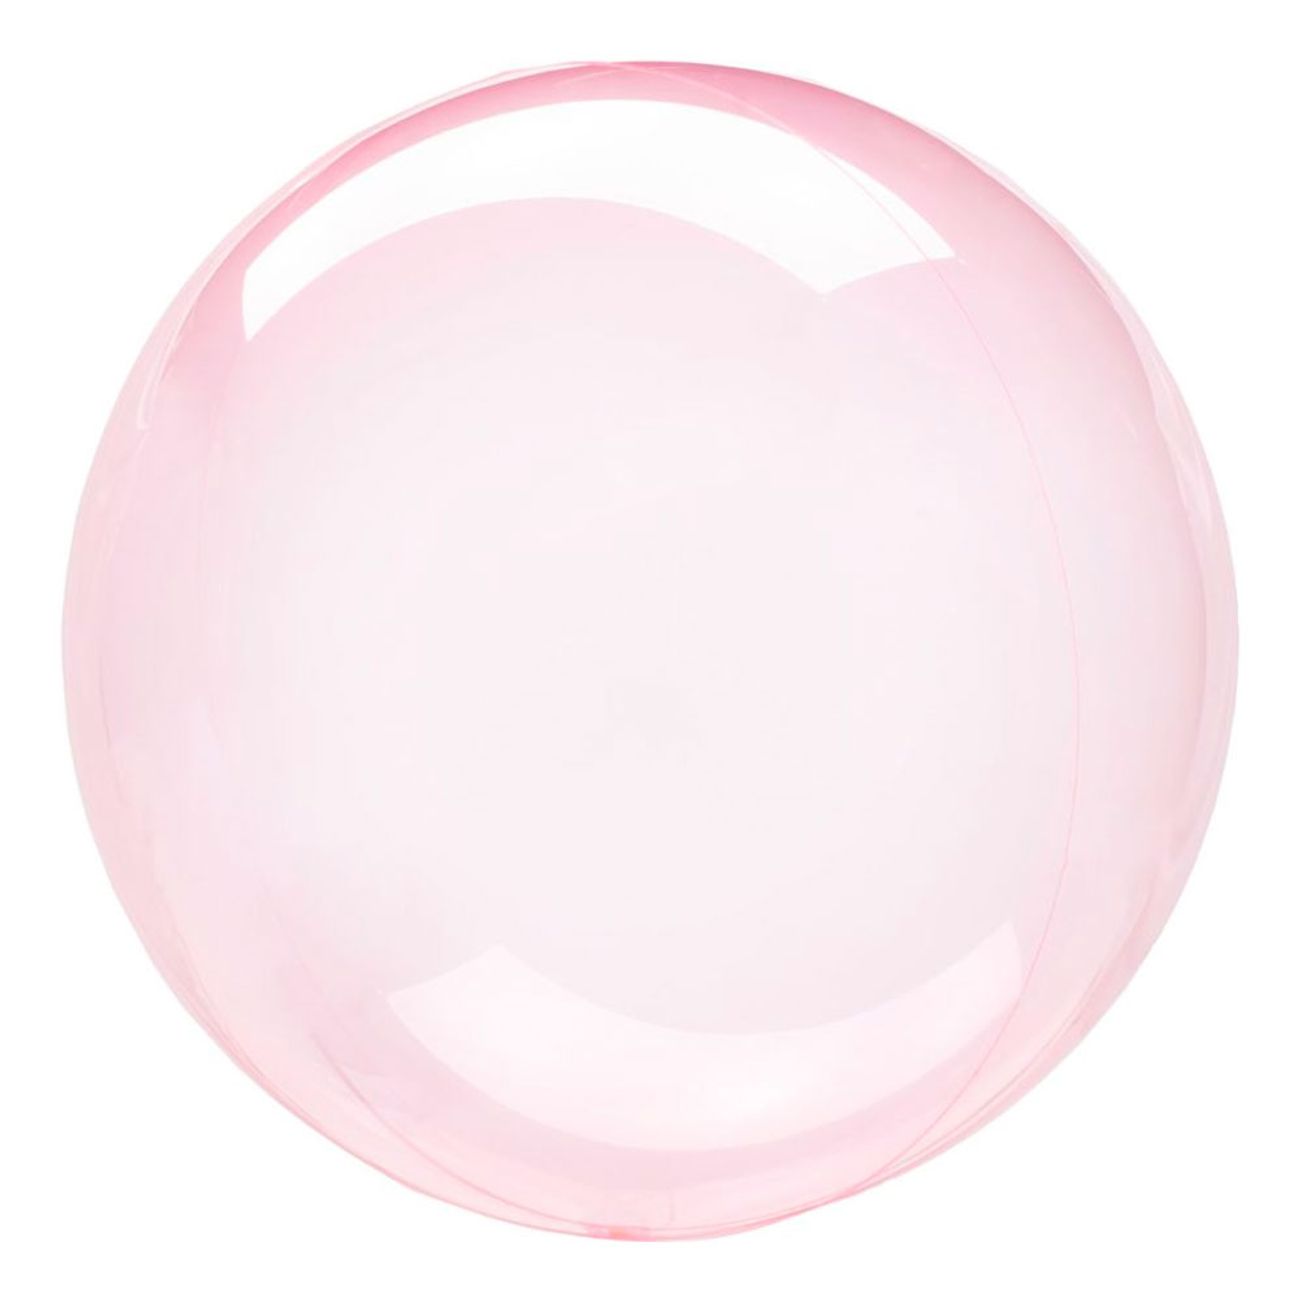 klotballong-morkrosa-transparent-73097-1